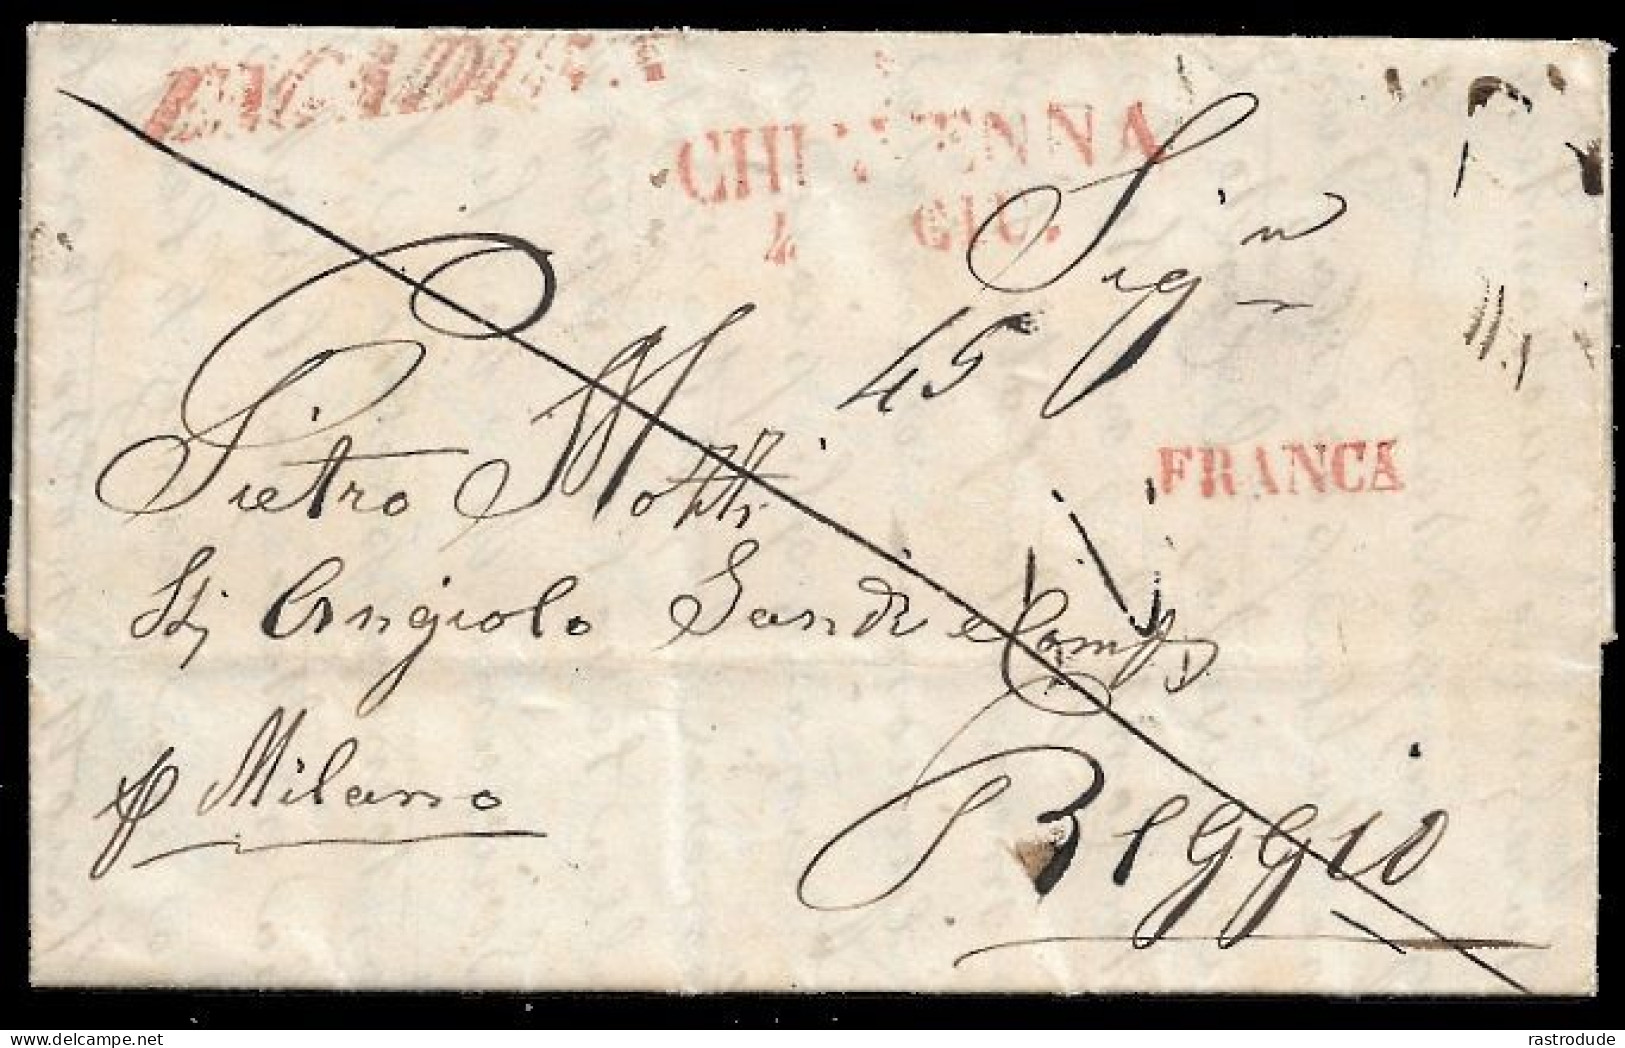 1846 SCHWEIZ VORPHILA SAMEDAN N. REGGIO LOMBARDEI über CHIAVENNA - 1843-1852 Poste Federali E Cantonali